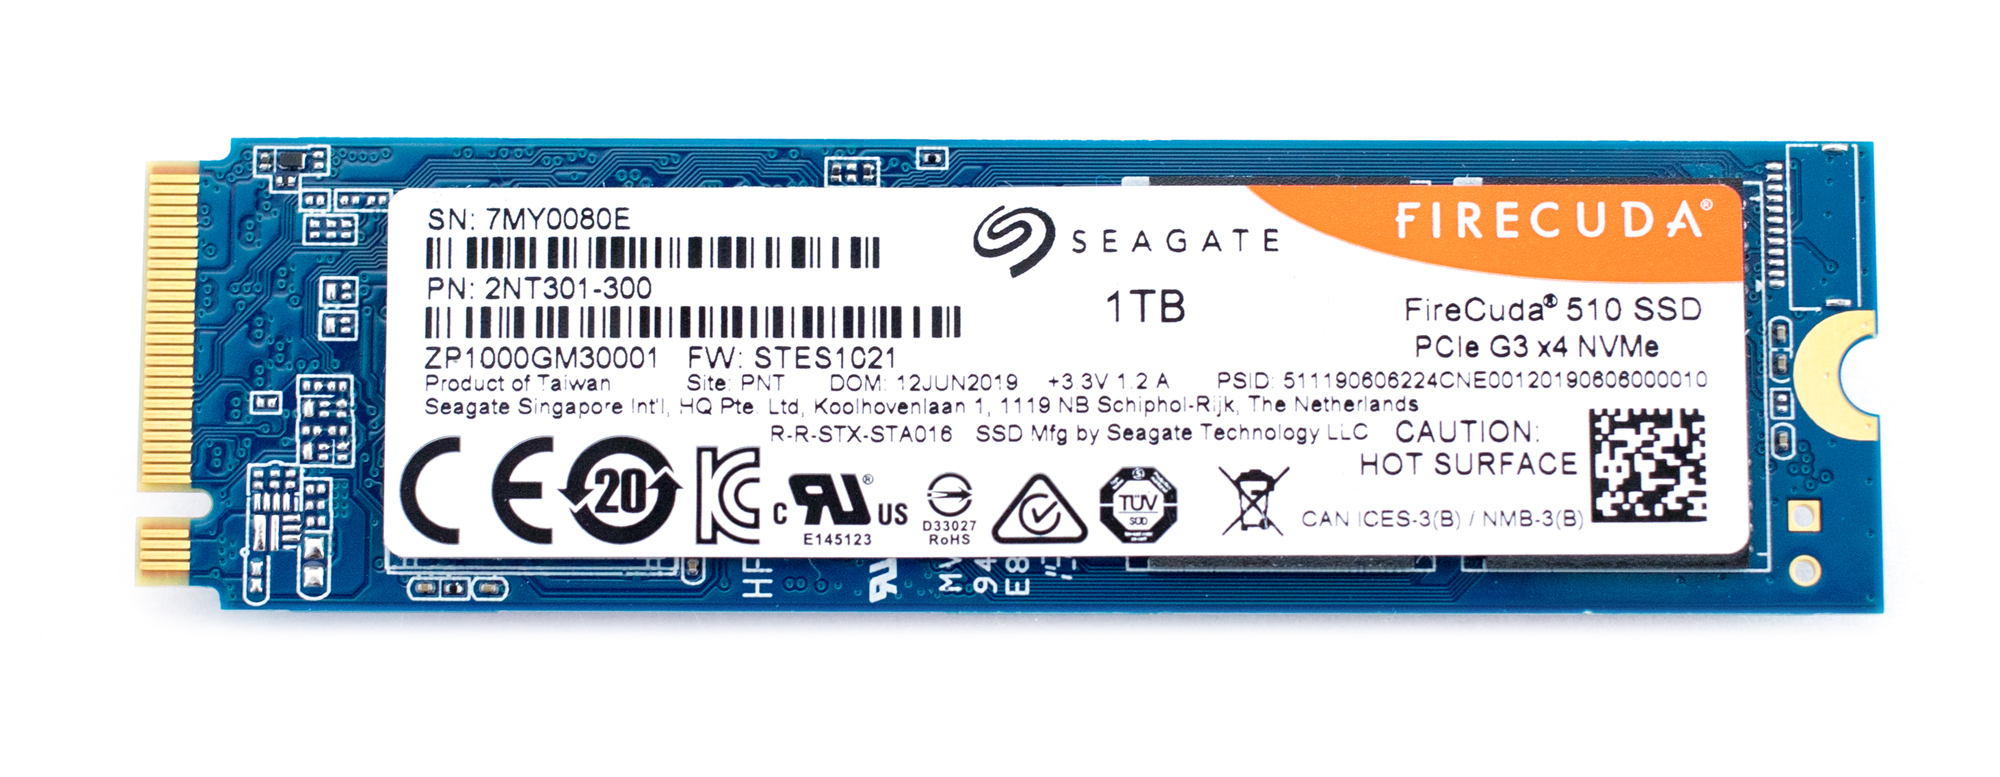 Seagate FireCuda 510 SSD Bottom